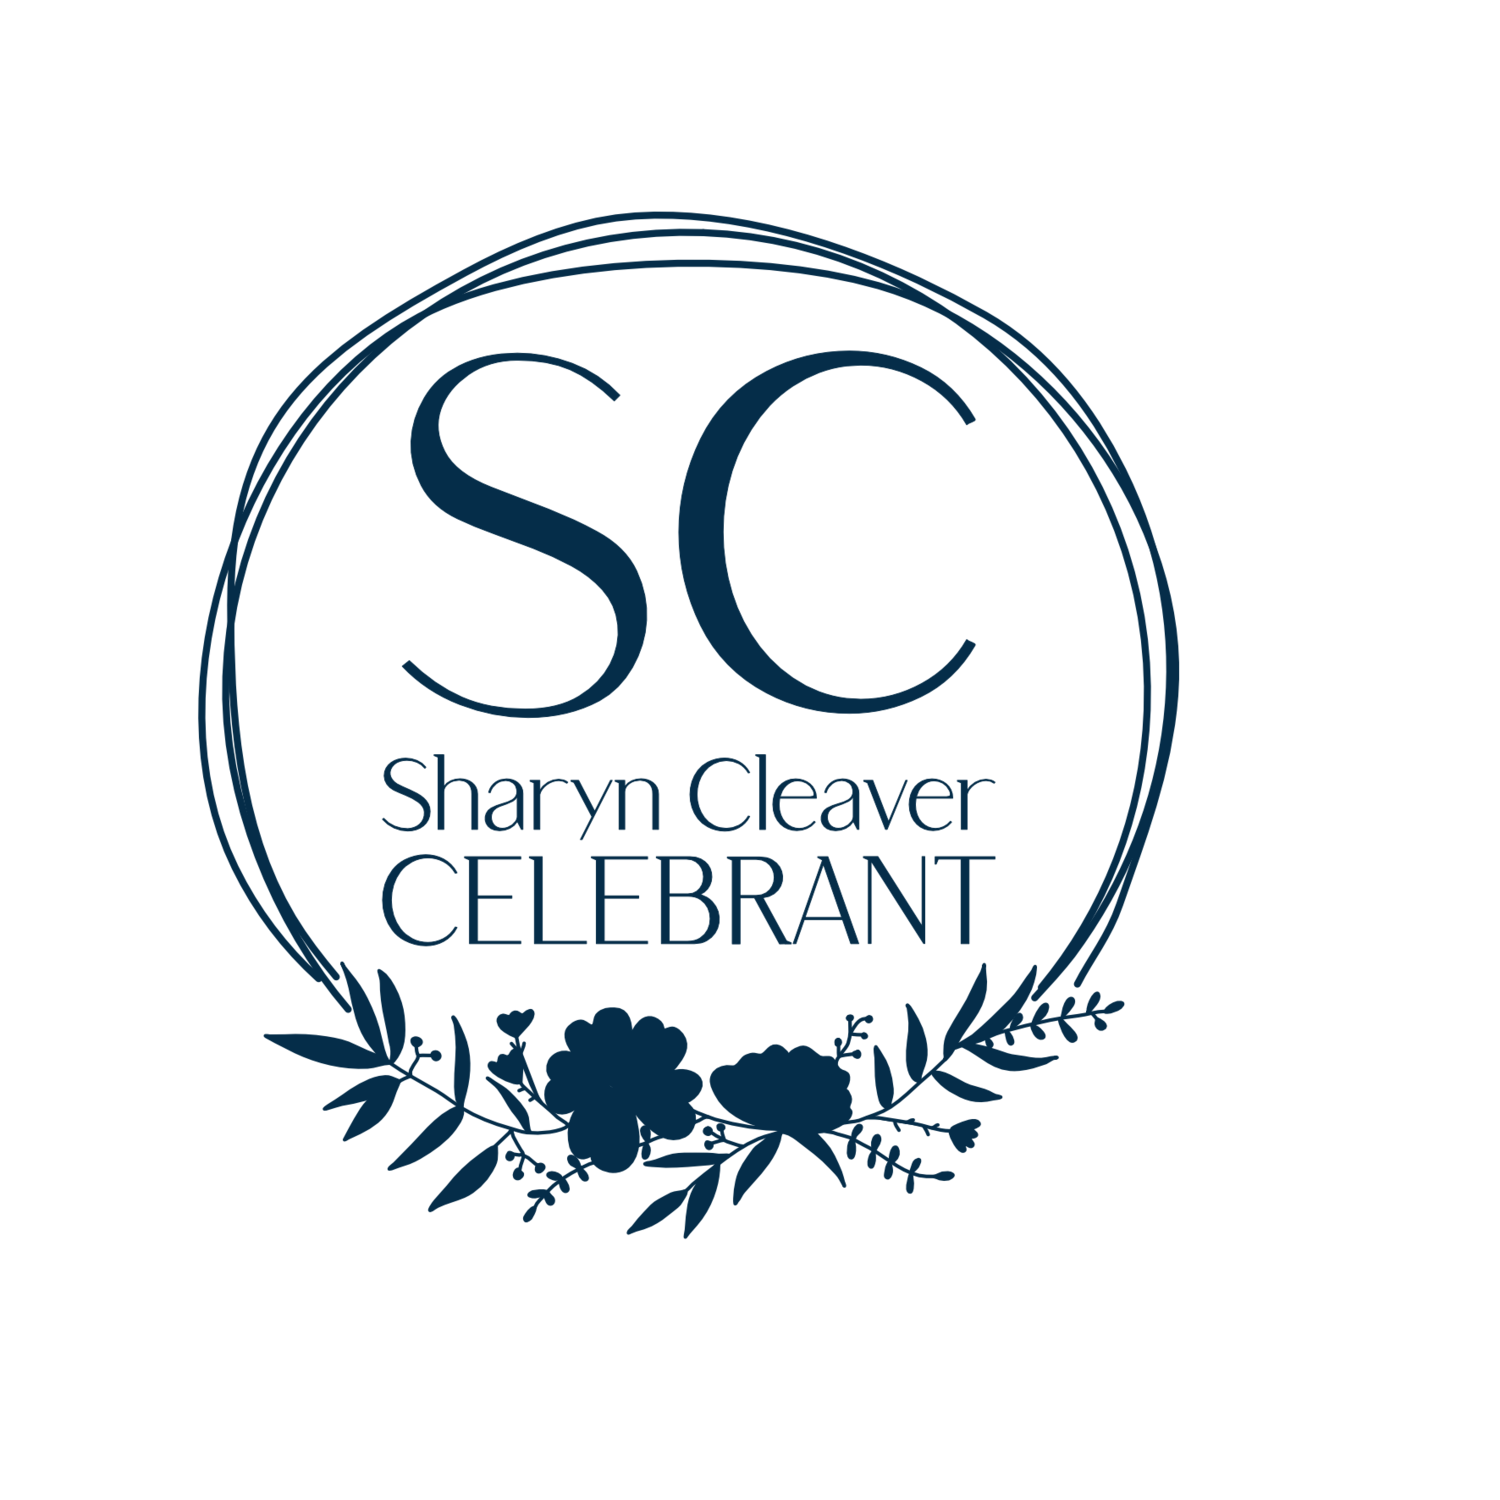 Sharyn Cleaver Celebrant